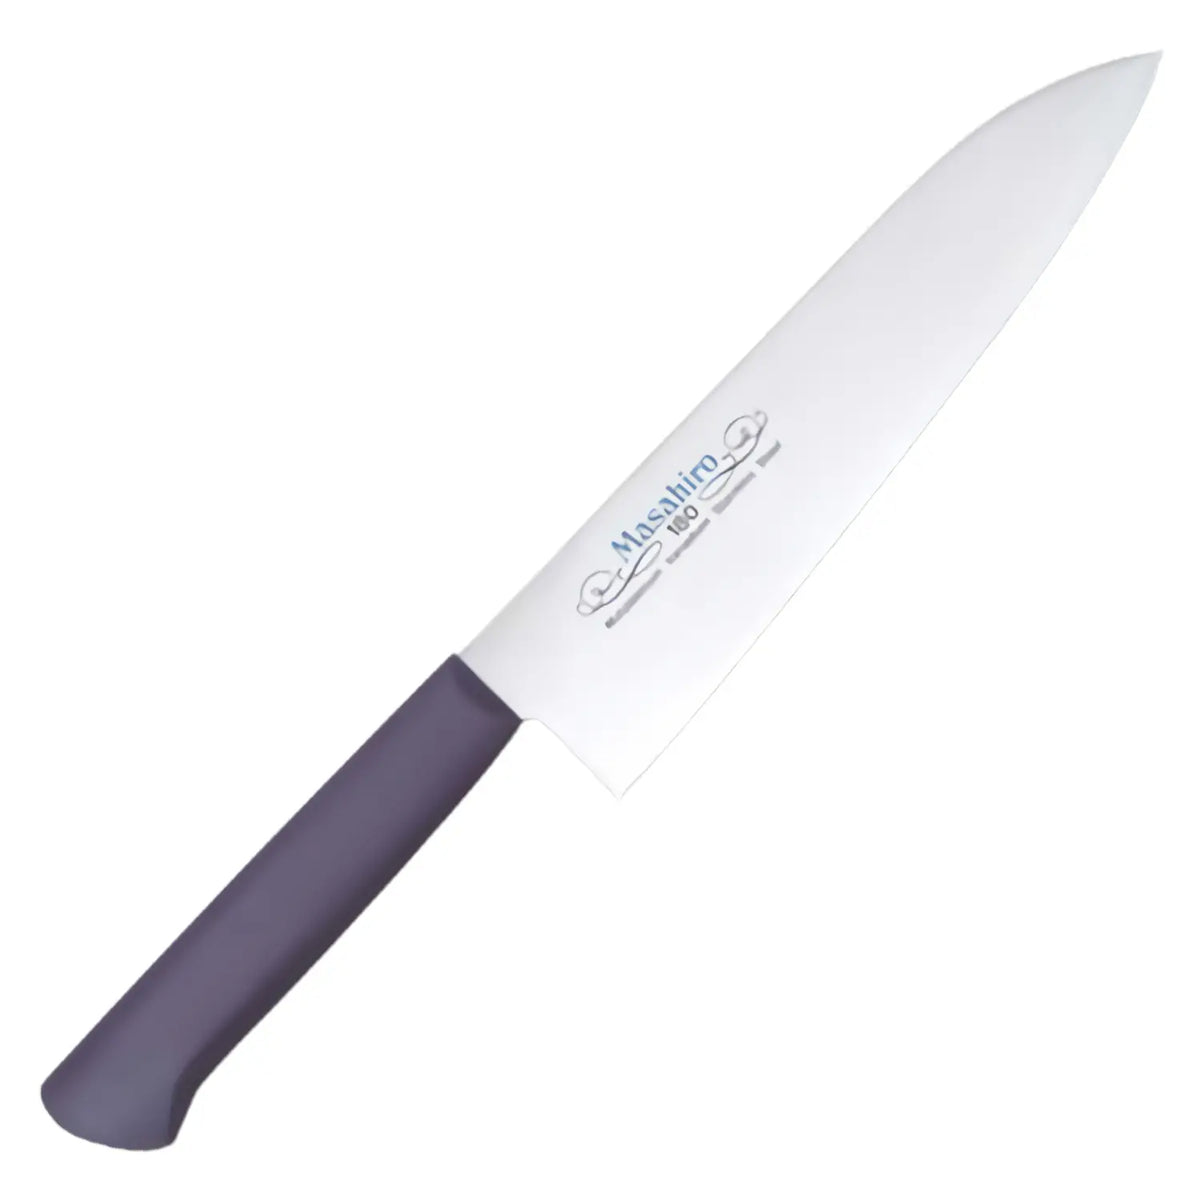 Kitchen Knives Stainless Steel Star Knives Bread Slicer Blade 430